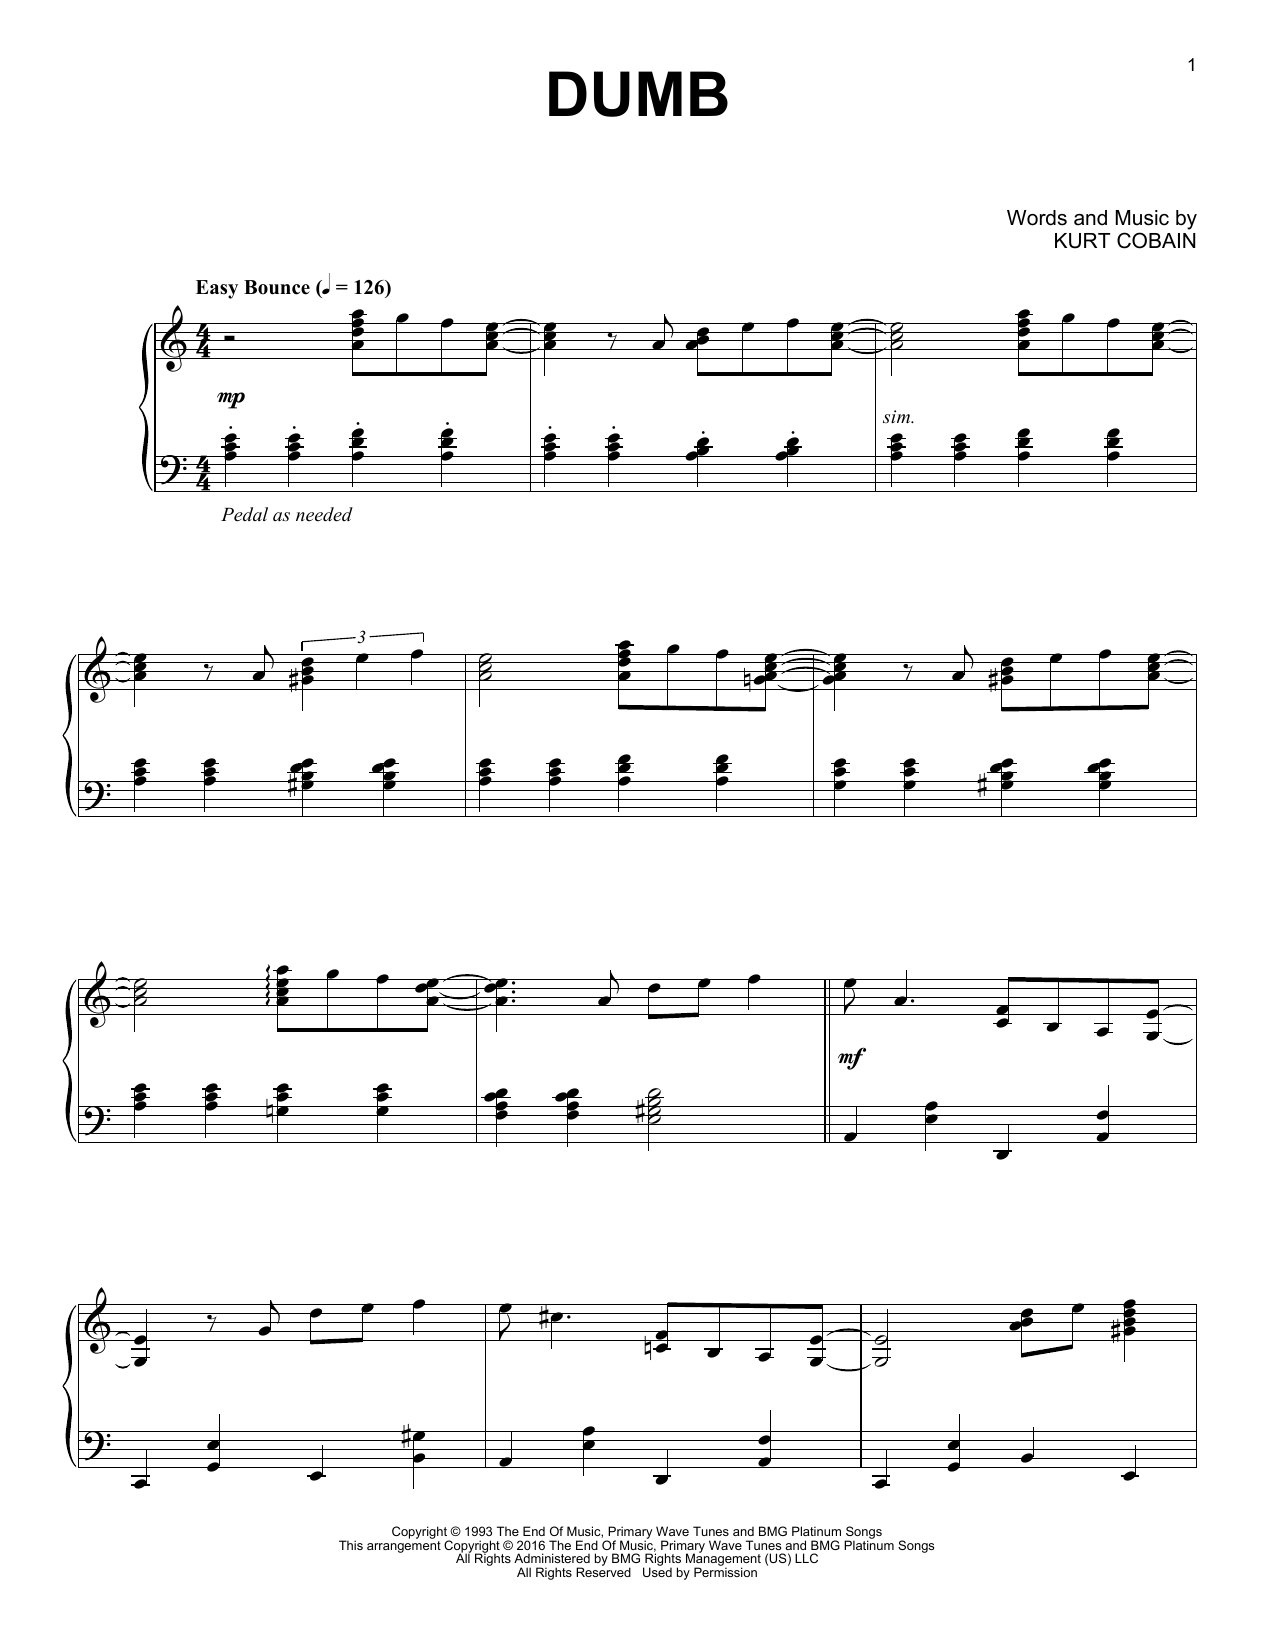 Nirvana Dumb [Jazz version] Sheet Music Notes & Chords for Piano - Download or Print PDF